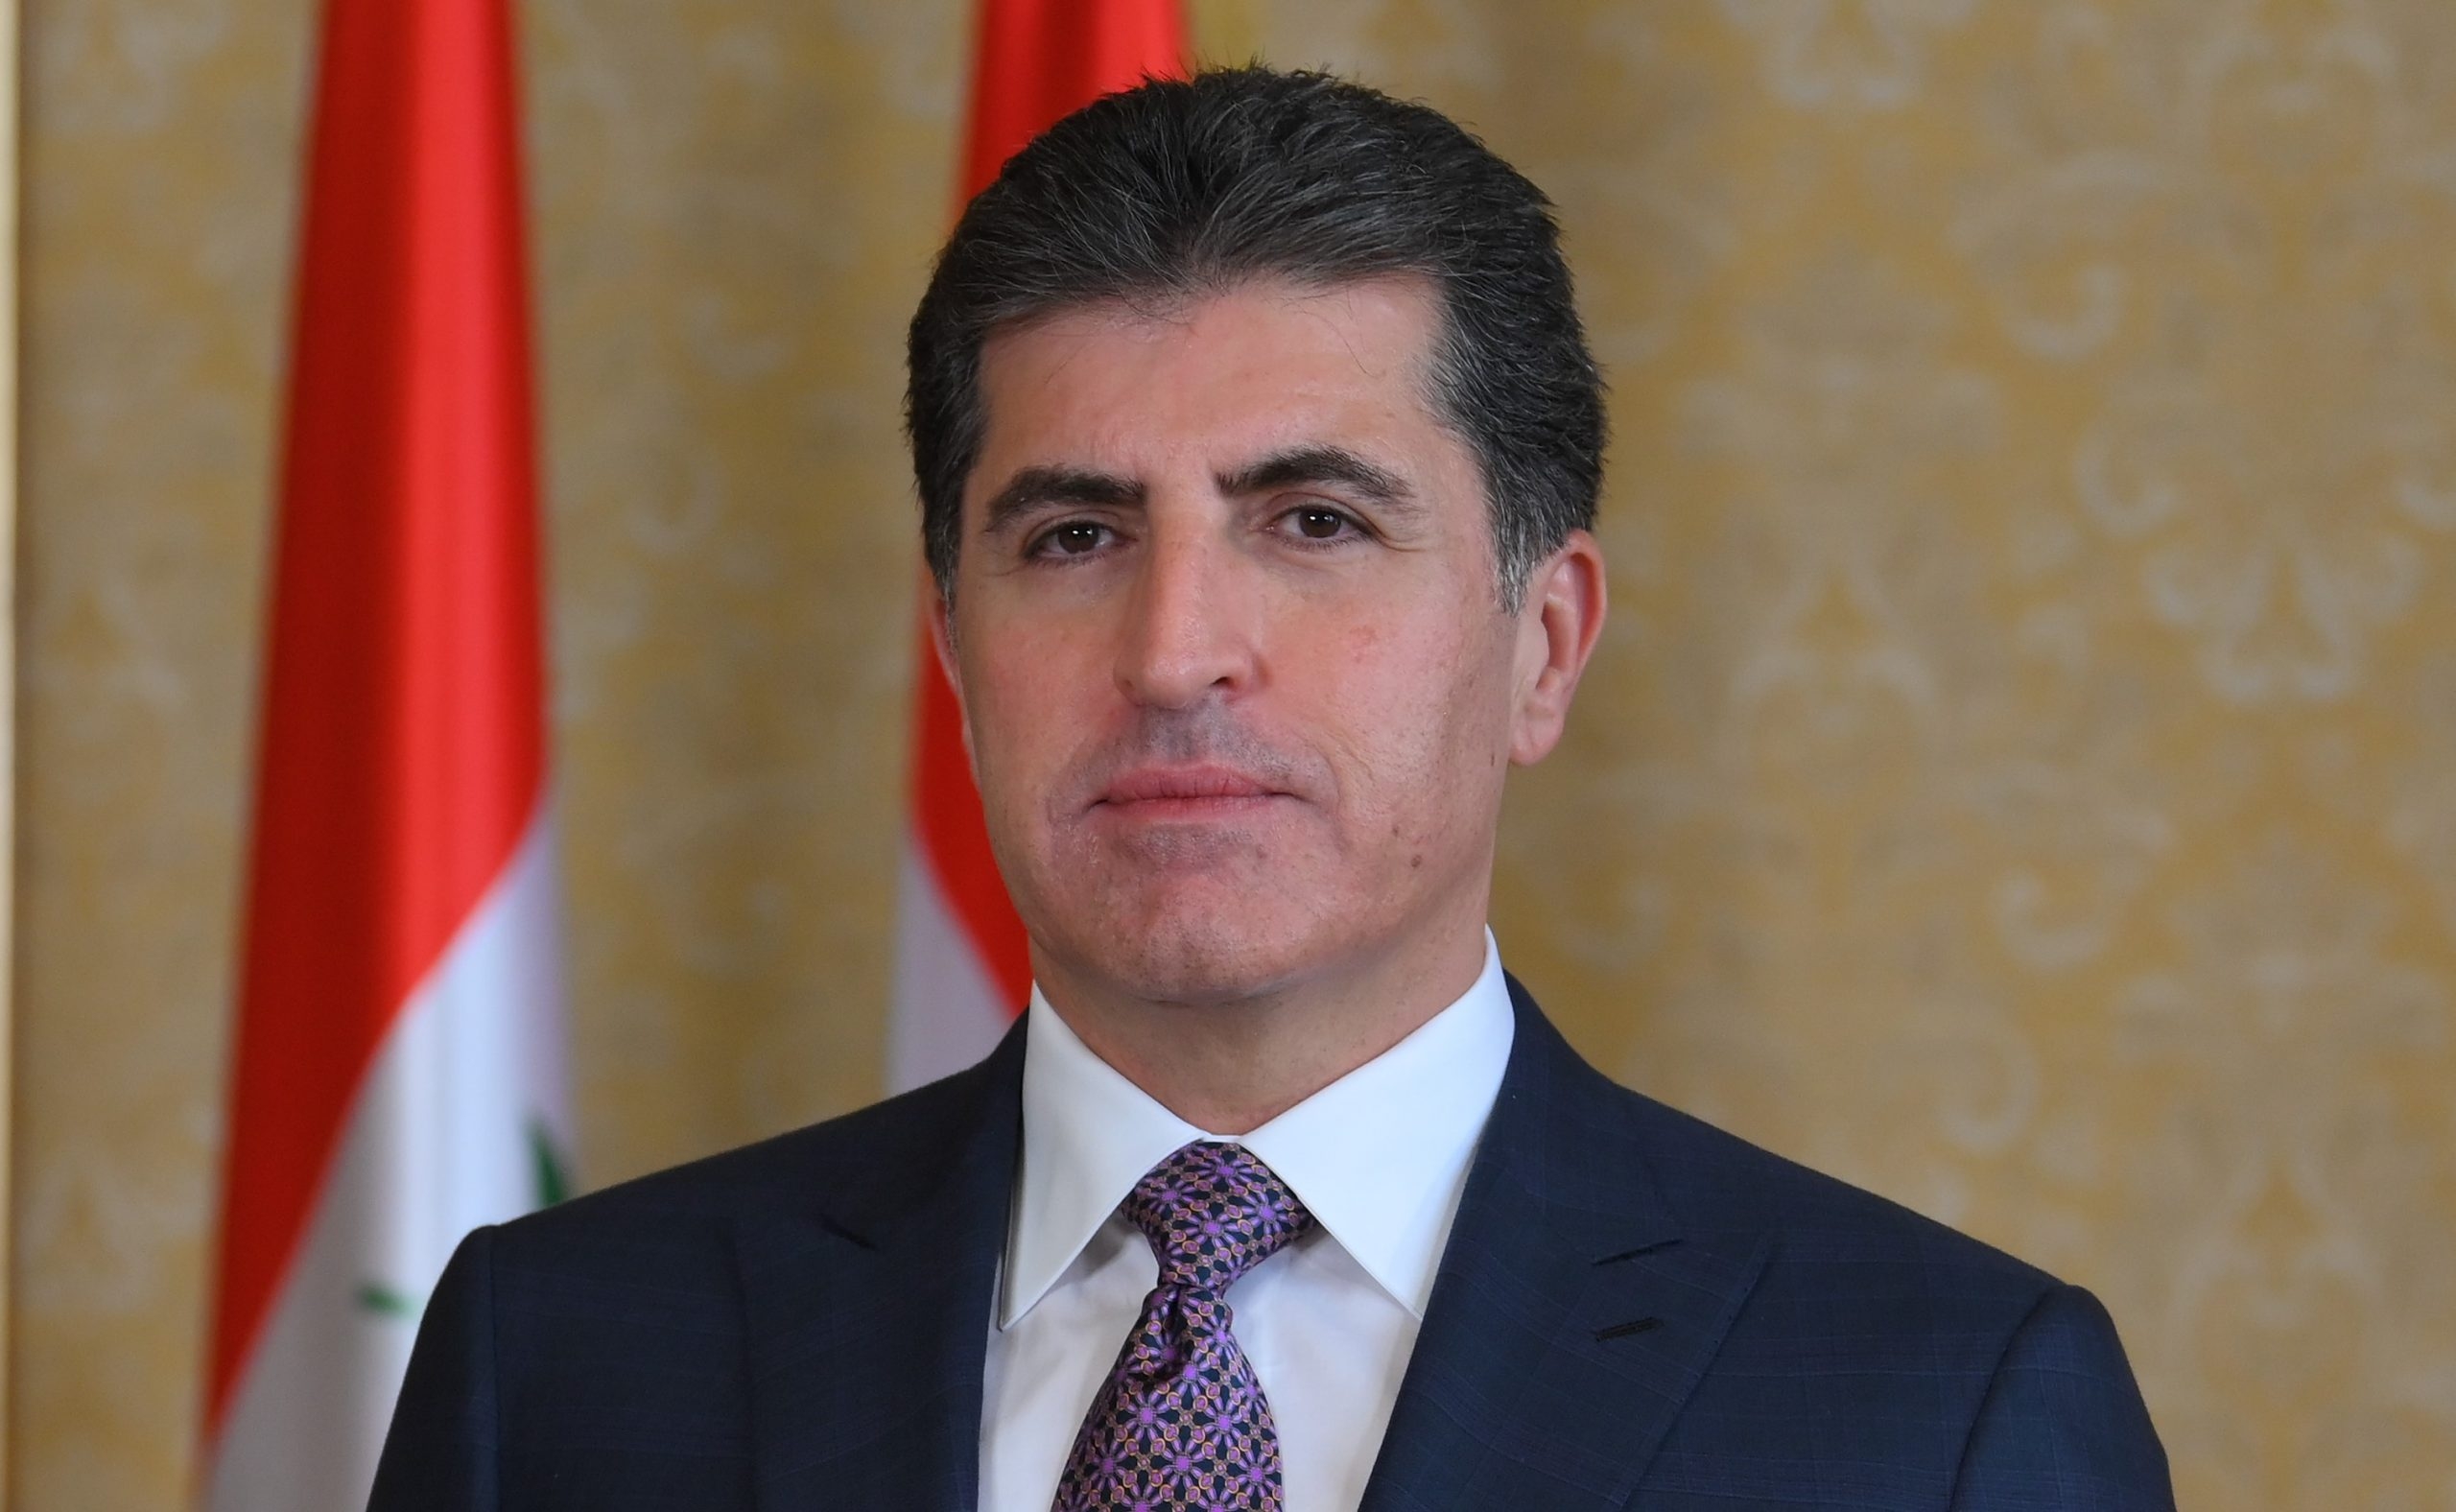 President Nechirvan Barzani offers his condolences to Sayyid Ammar and the al-Hakim family